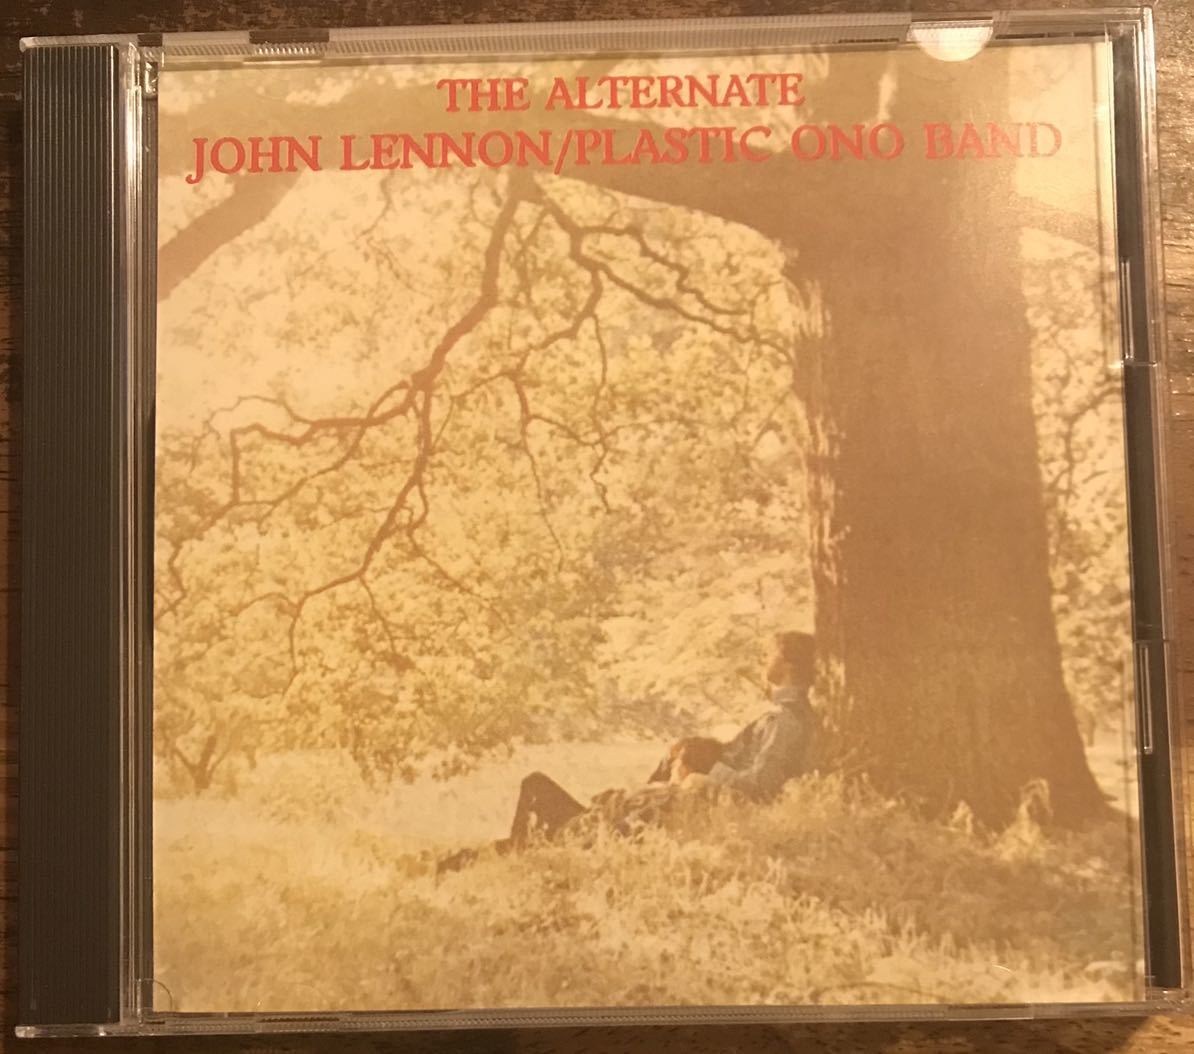 John Lennon / The Alternate Plastic Ono Band (1CD) / John Lennon / [ John. душа ] генератор переменного тока -to альбом / The Beatles / Beatles 